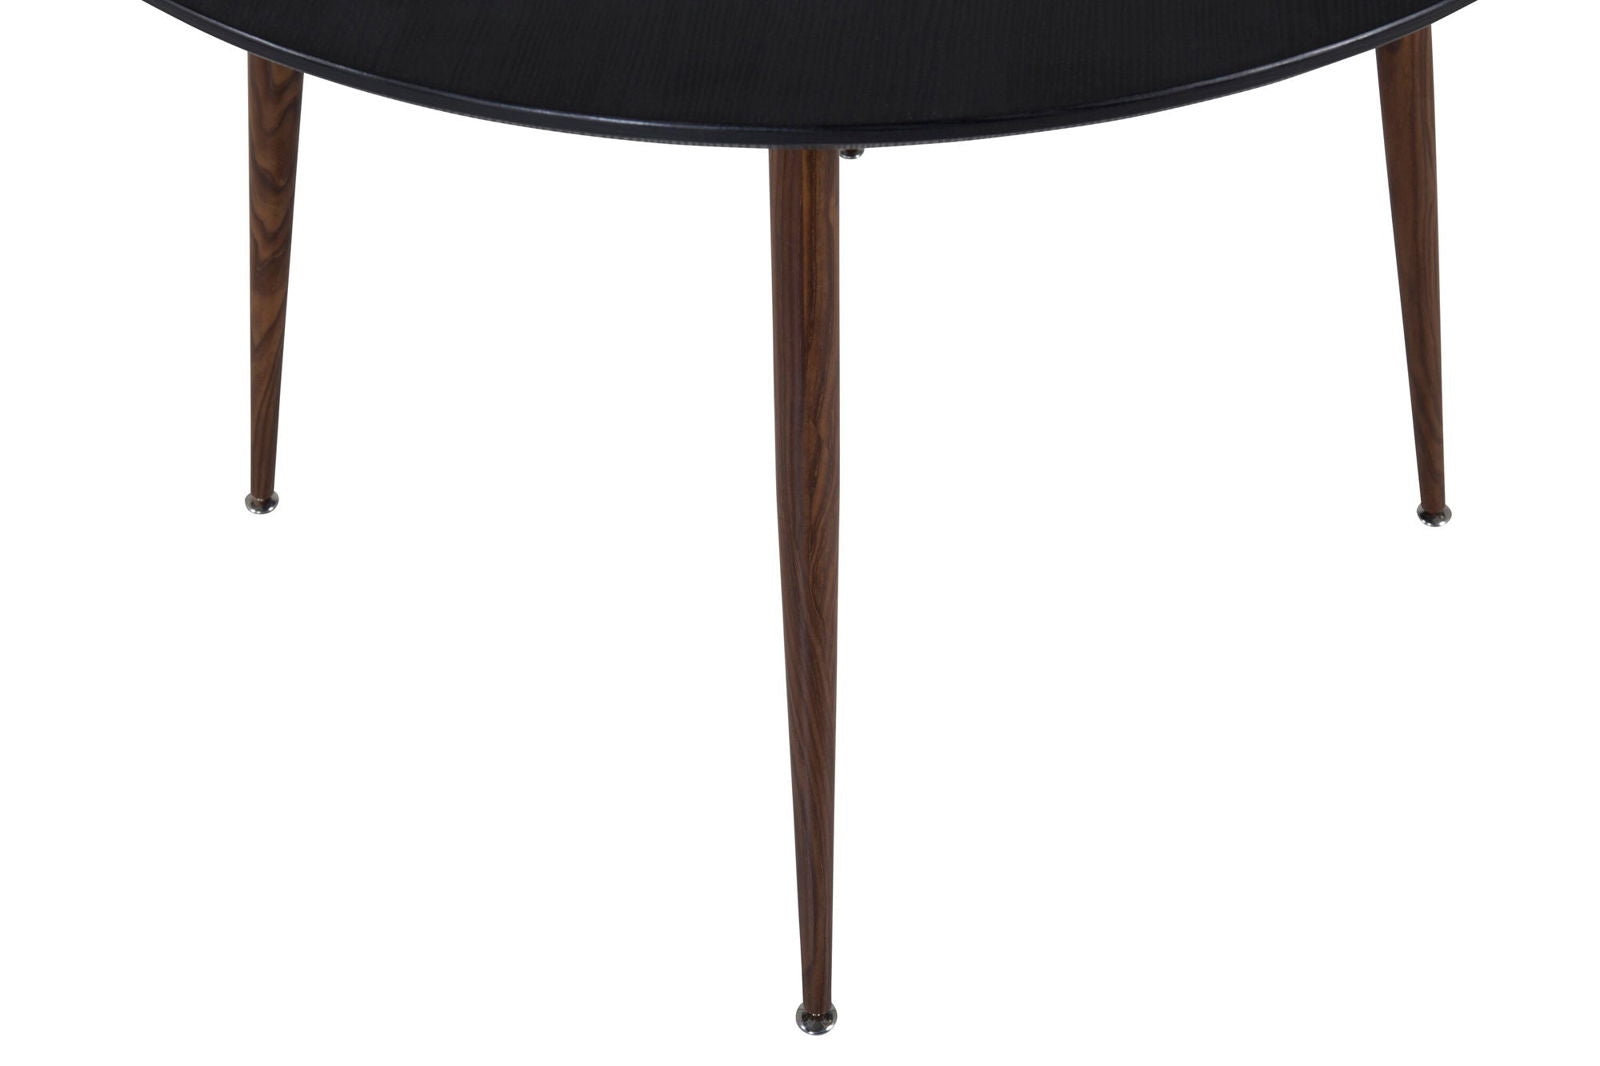 Venture Home Plaza Round Table 100 cm - Black Top - Walnut legs - vivahabitat.com